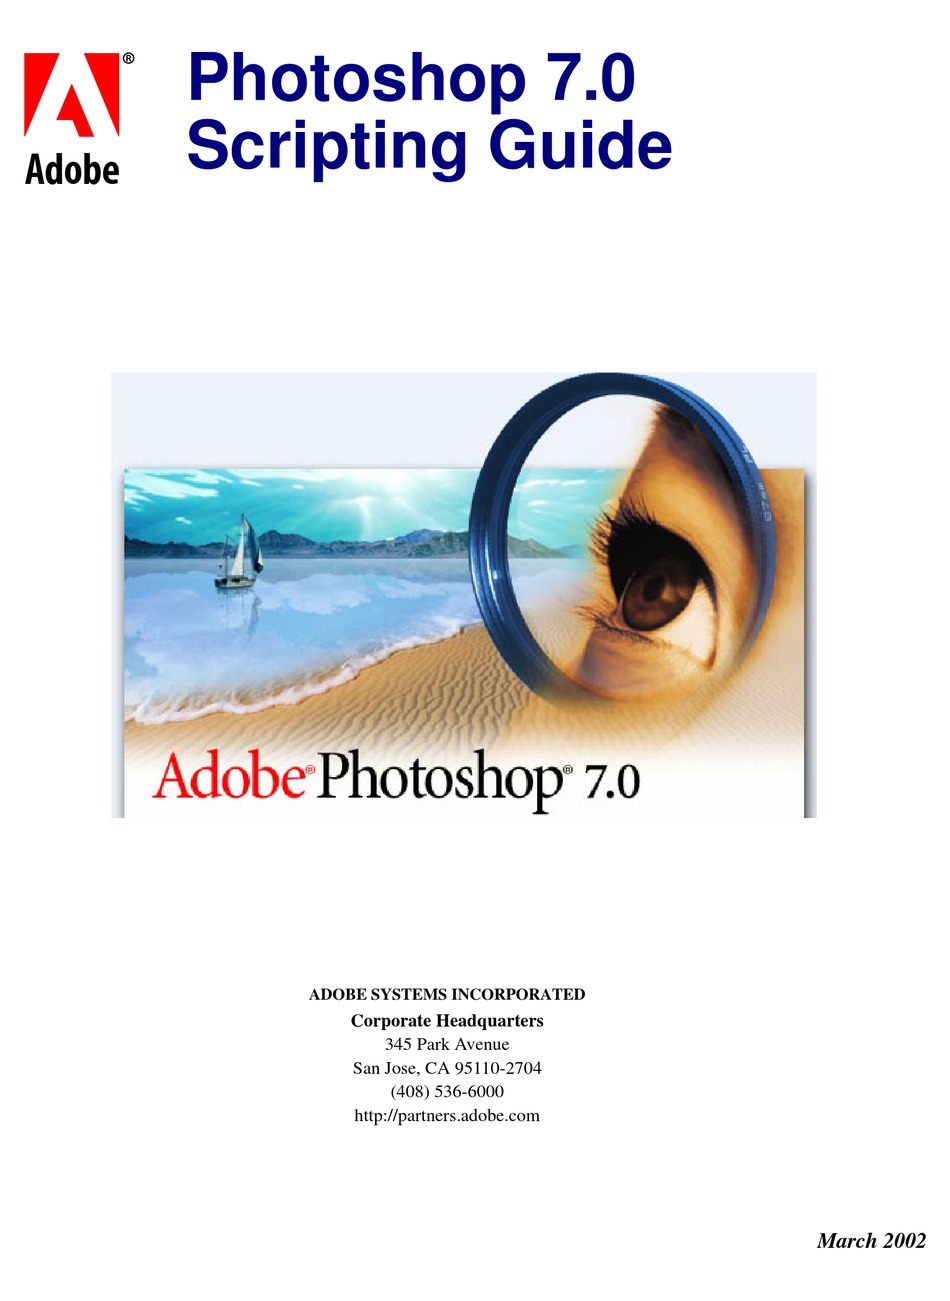 adobe photoshop user manual free download